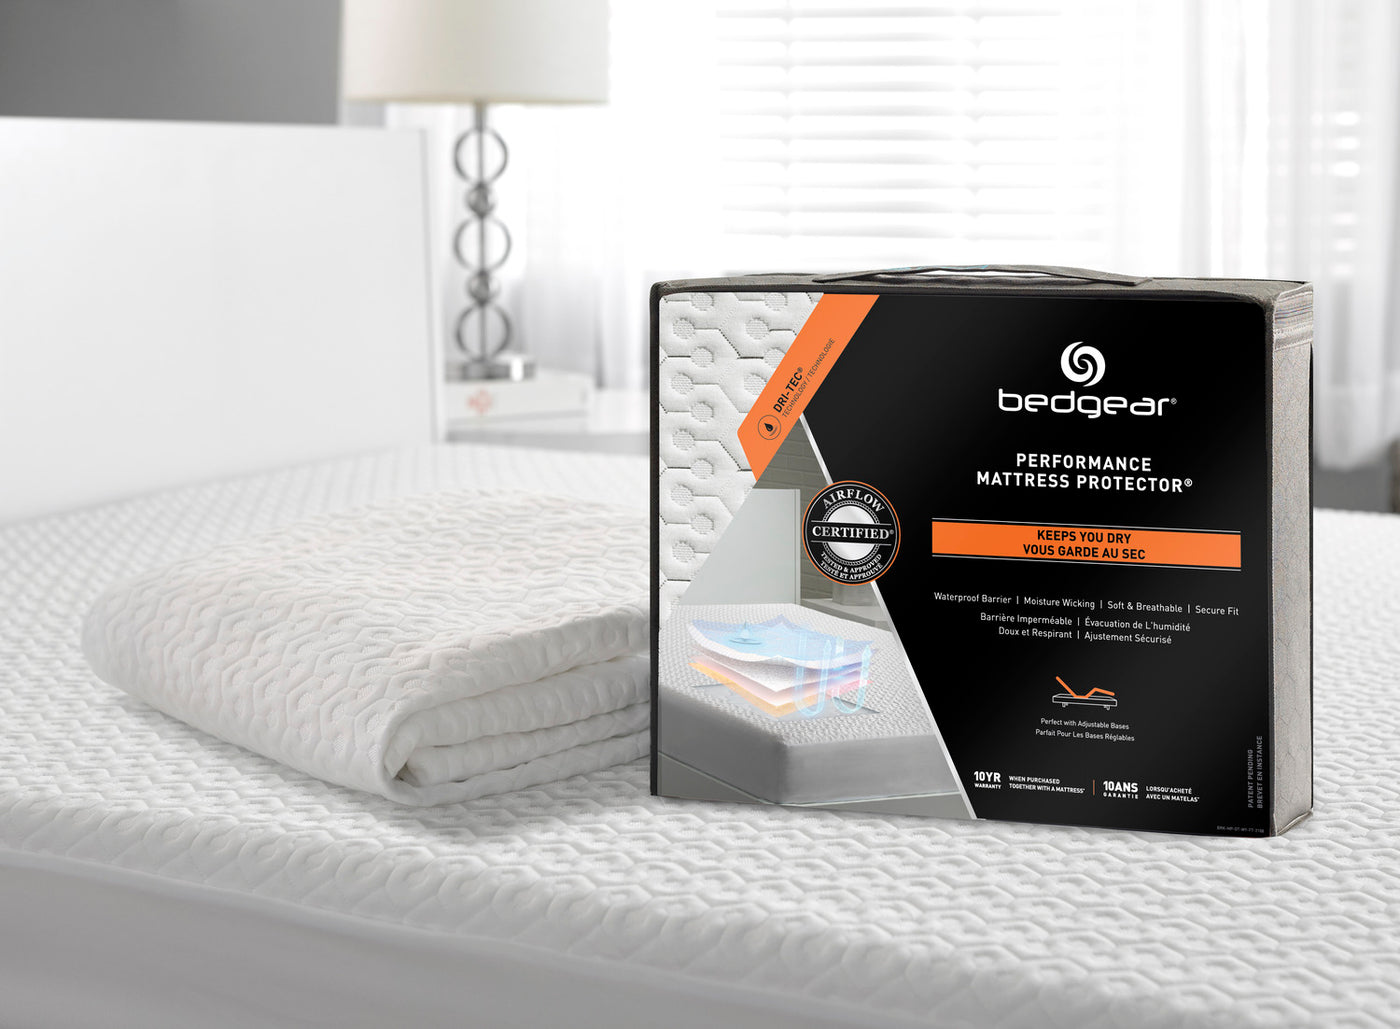 How Bedgear products improve sleep quality